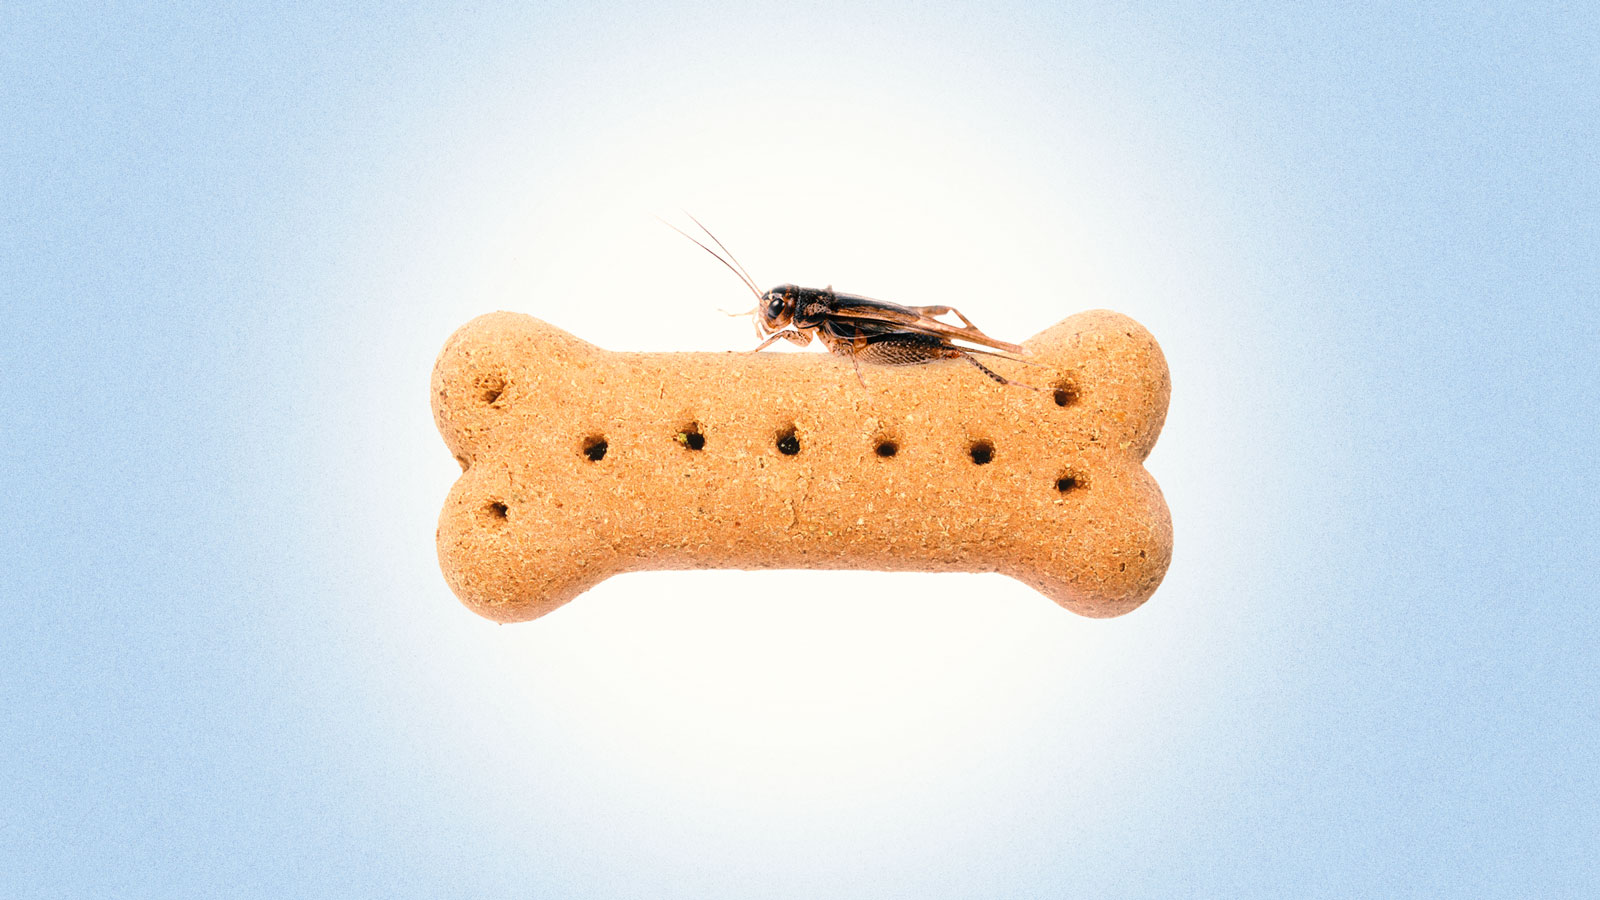 Illustration of cricket sitting atop a dog biscuit against a light blue background